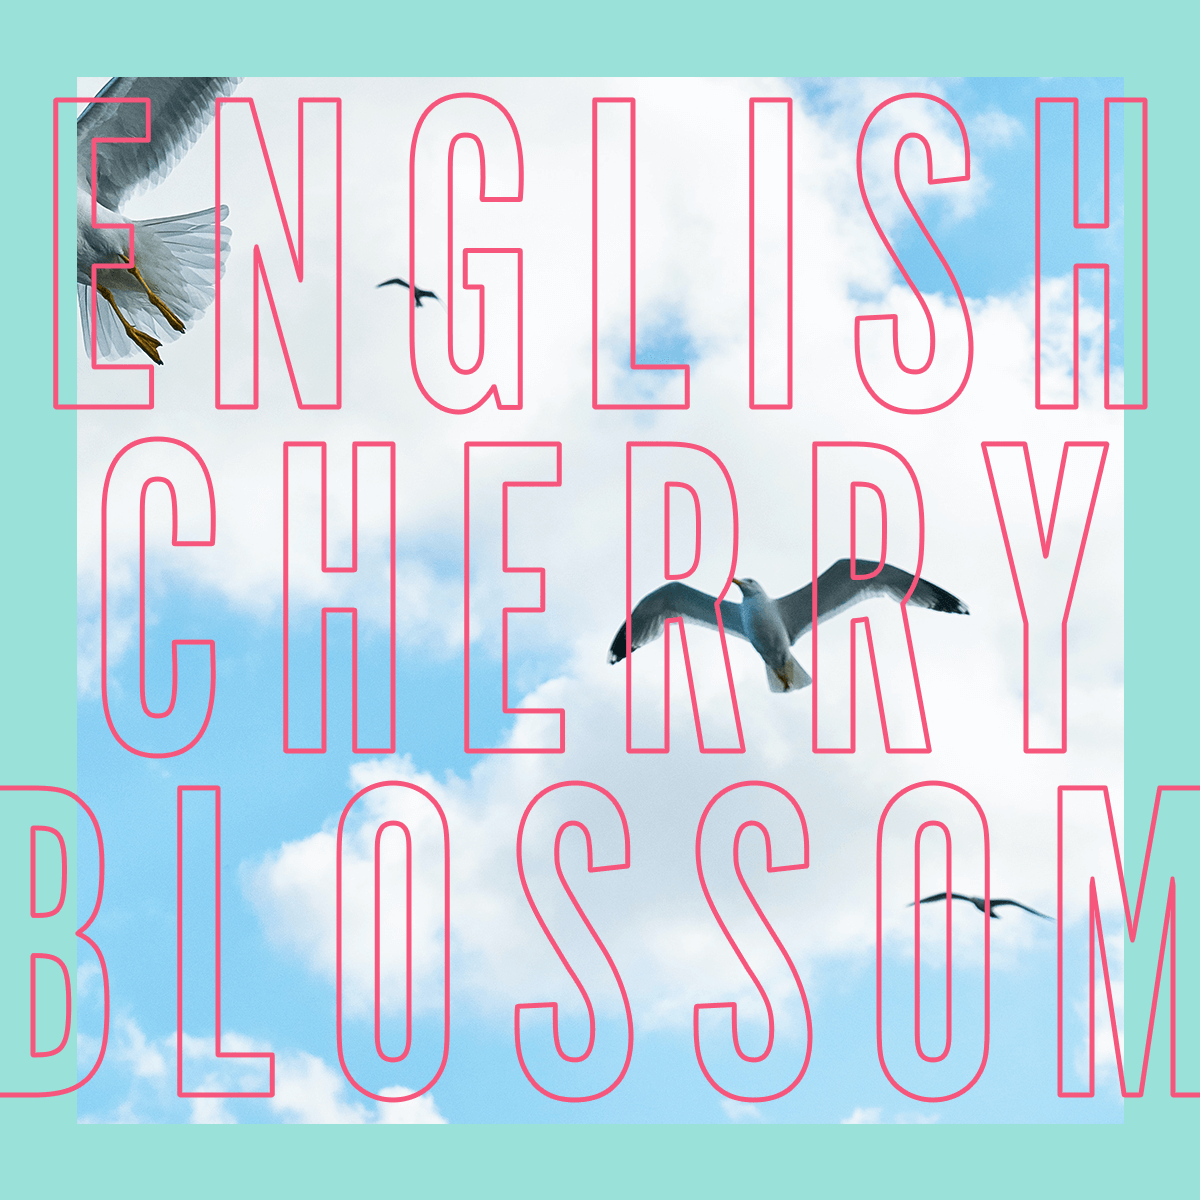 English Cherry Blossom Fragrance 0.1oz